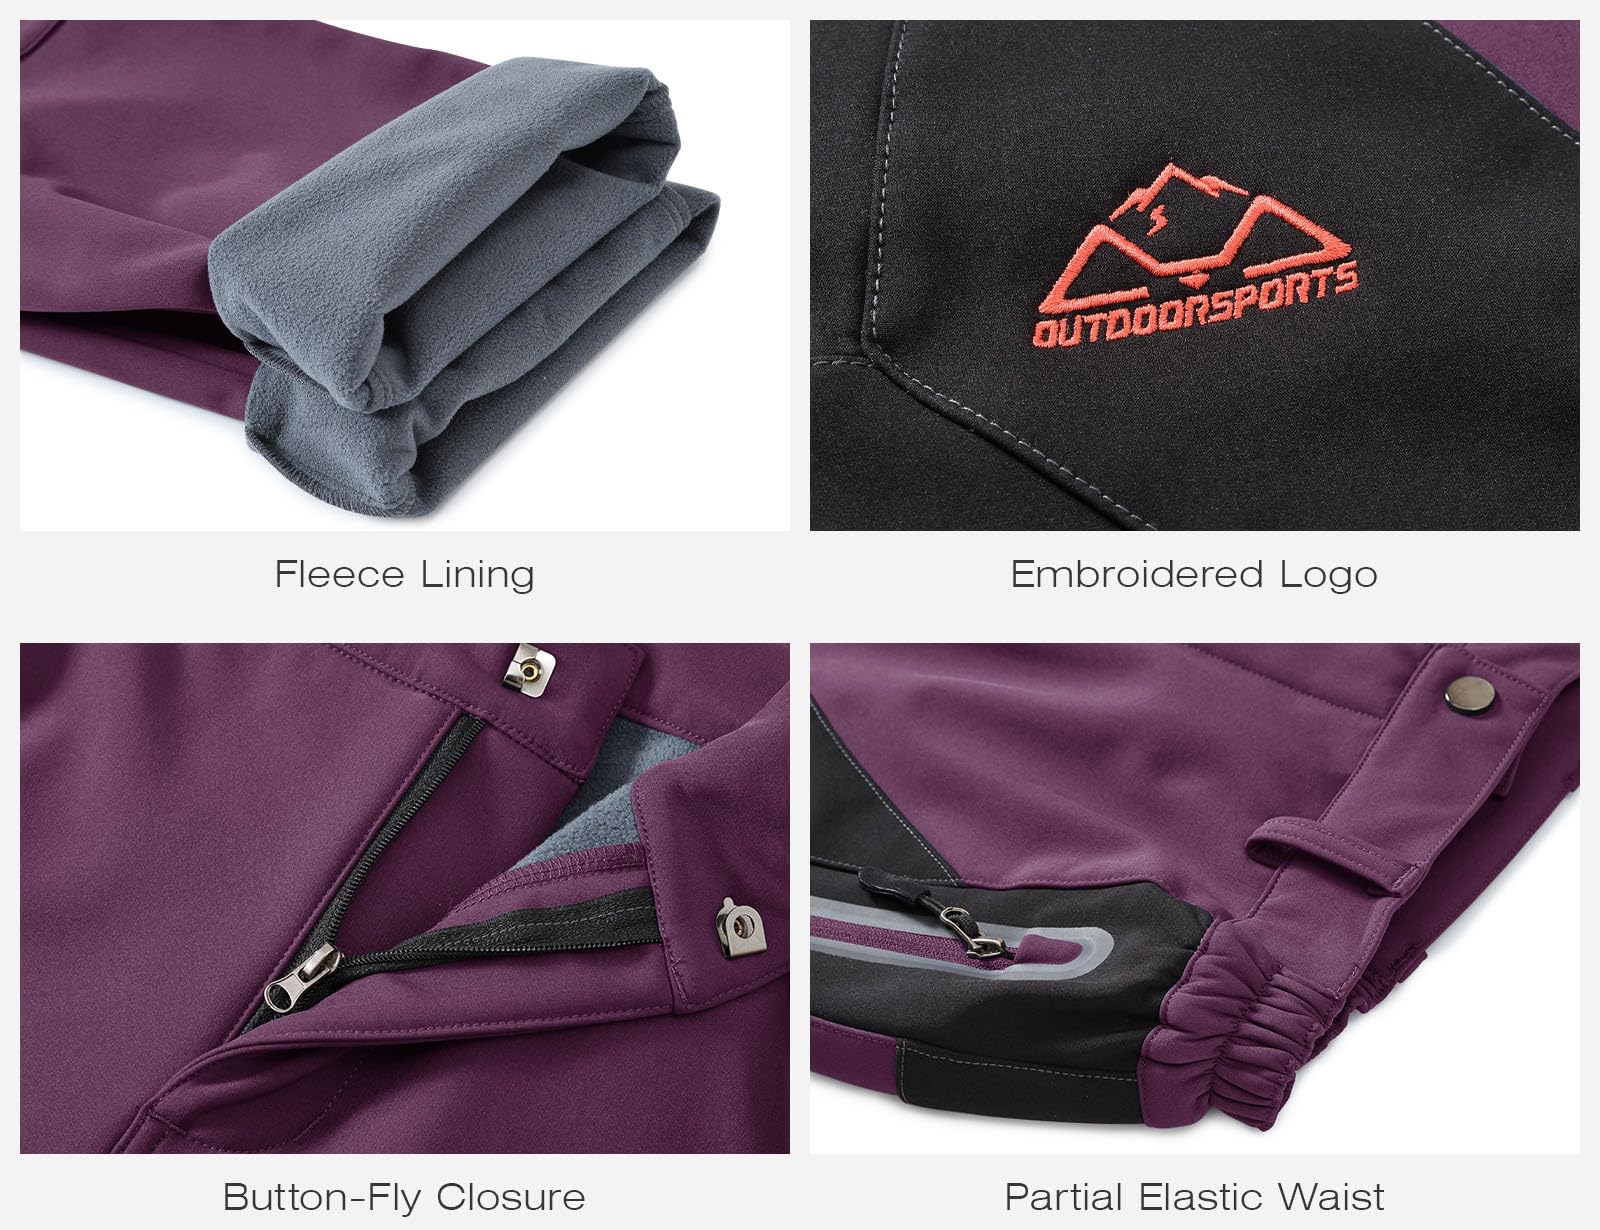 Rdruko Women's Ski Pants Waterproof Insulated Outdoor Hiking Winter Softshell Cold Weather(Purple, US M)